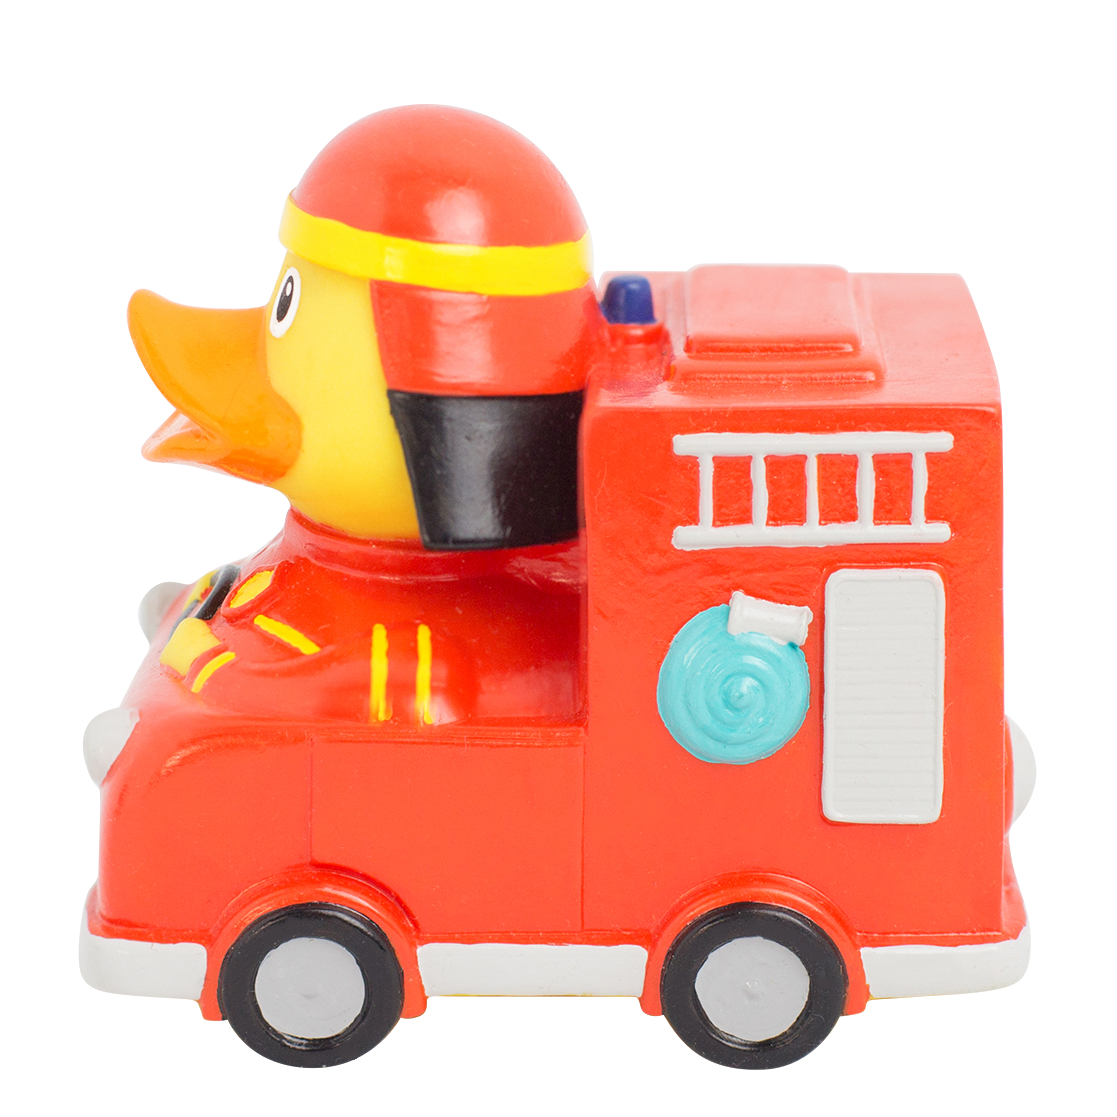 Anatra camion dei pompieri